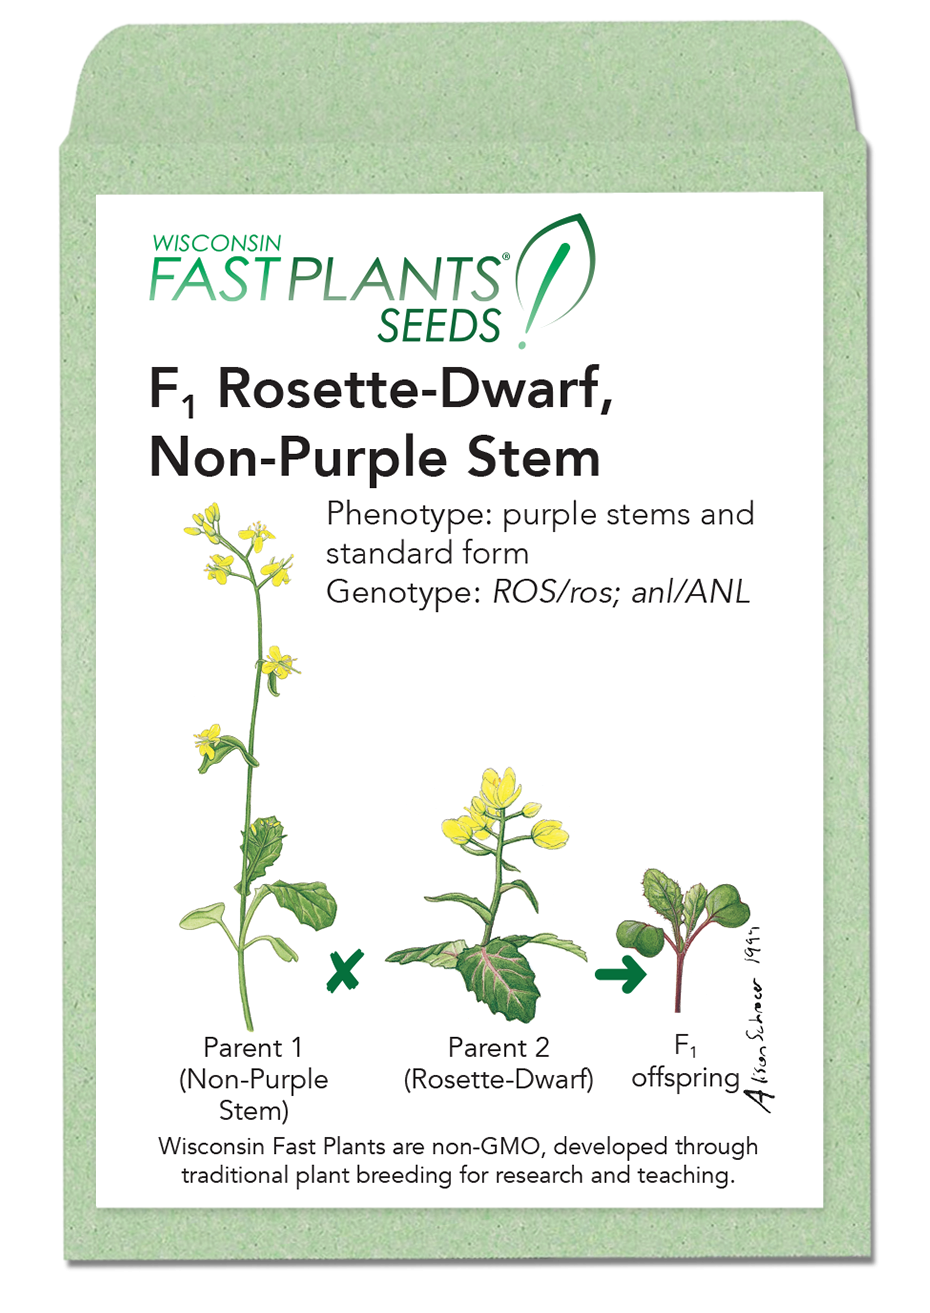 F1 Rosette-Dwarf, Non-Purple Stem seed packet